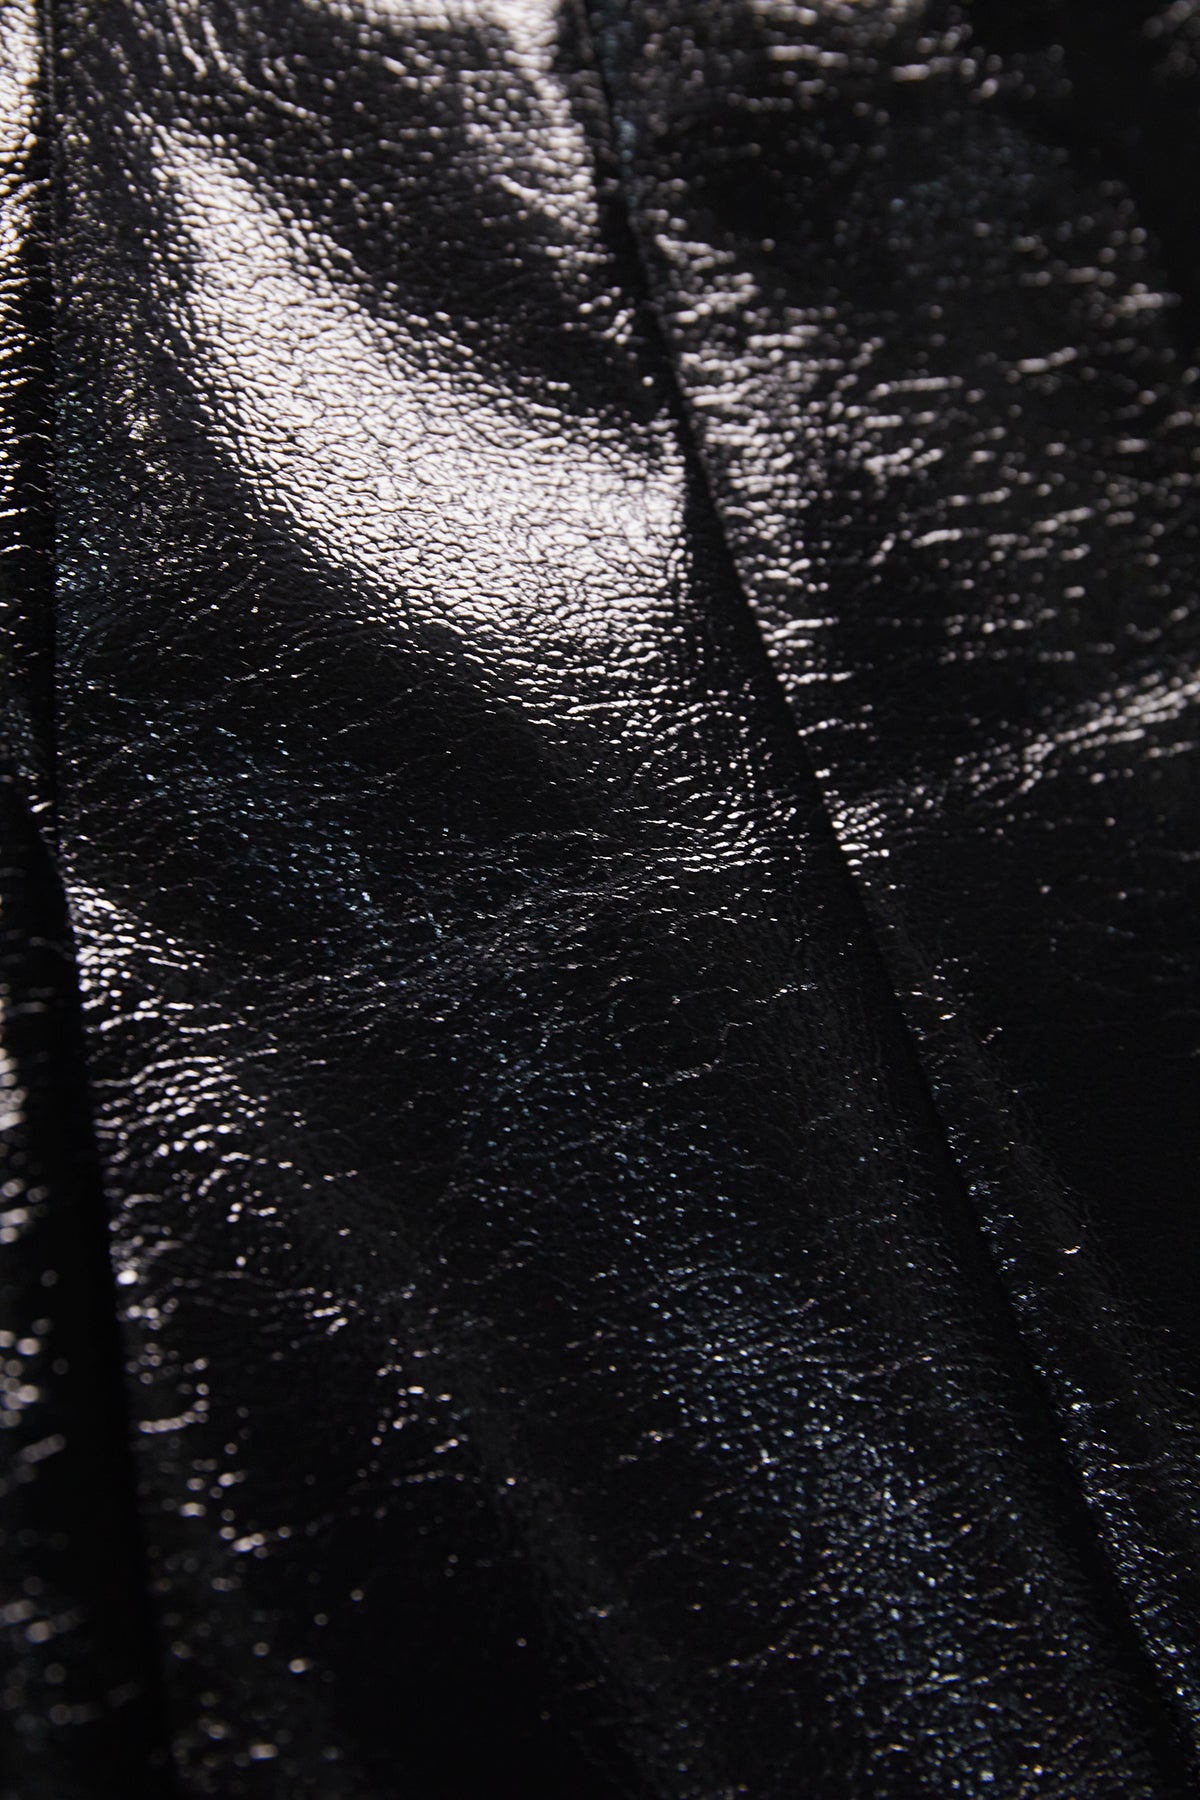 Fake leather mini skirt / Black